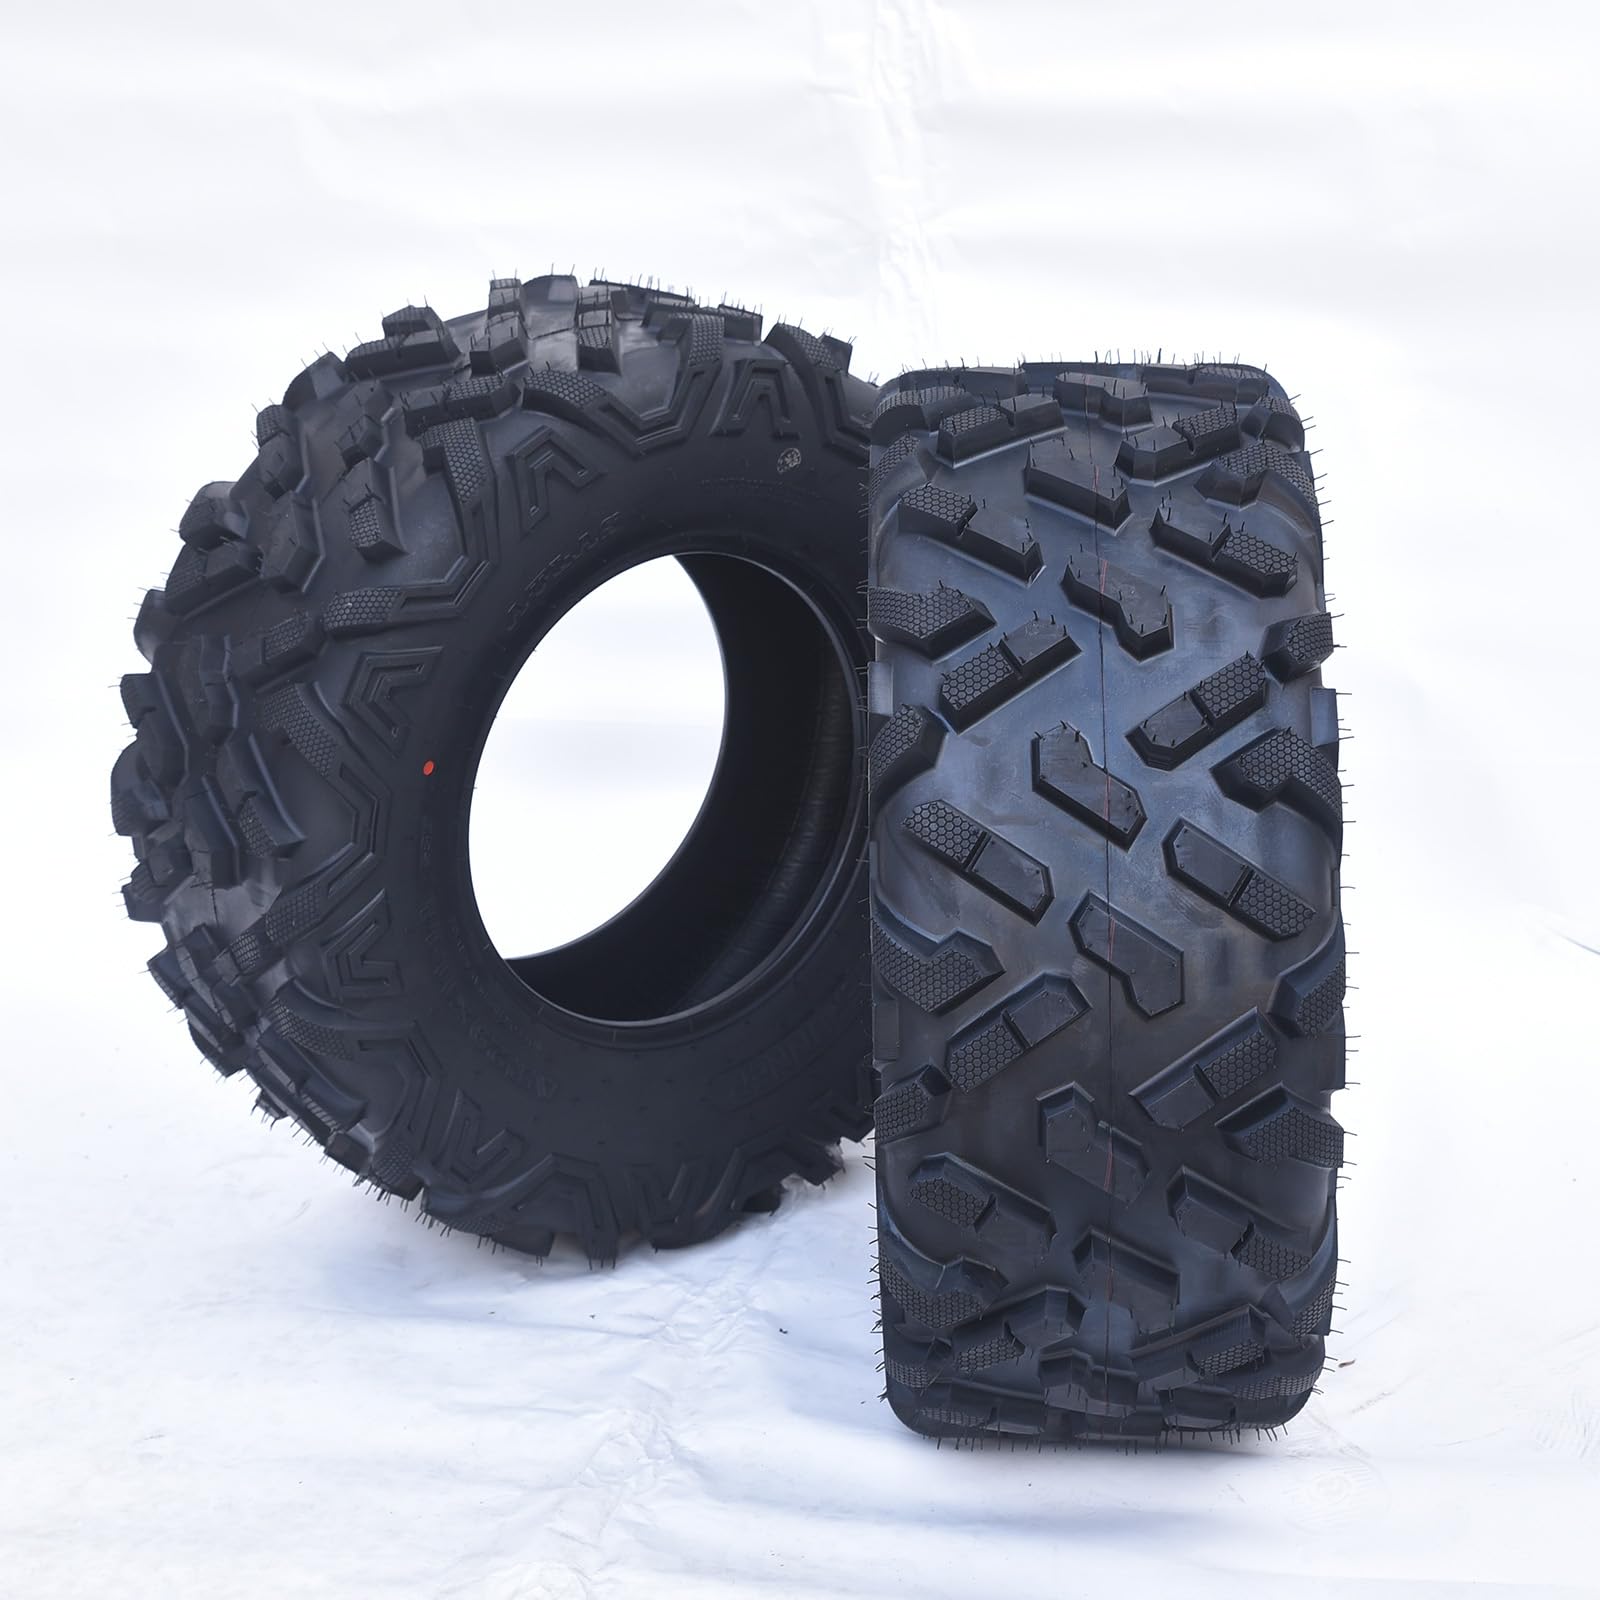 26x9-14 ATV Tires UTV Trail Sand Off-Road Tires 26x9-14, All Terrain Tires 20mm Tread Depth 26x9x14 UTV Tires, 6 PR, Tubeless Set of 2